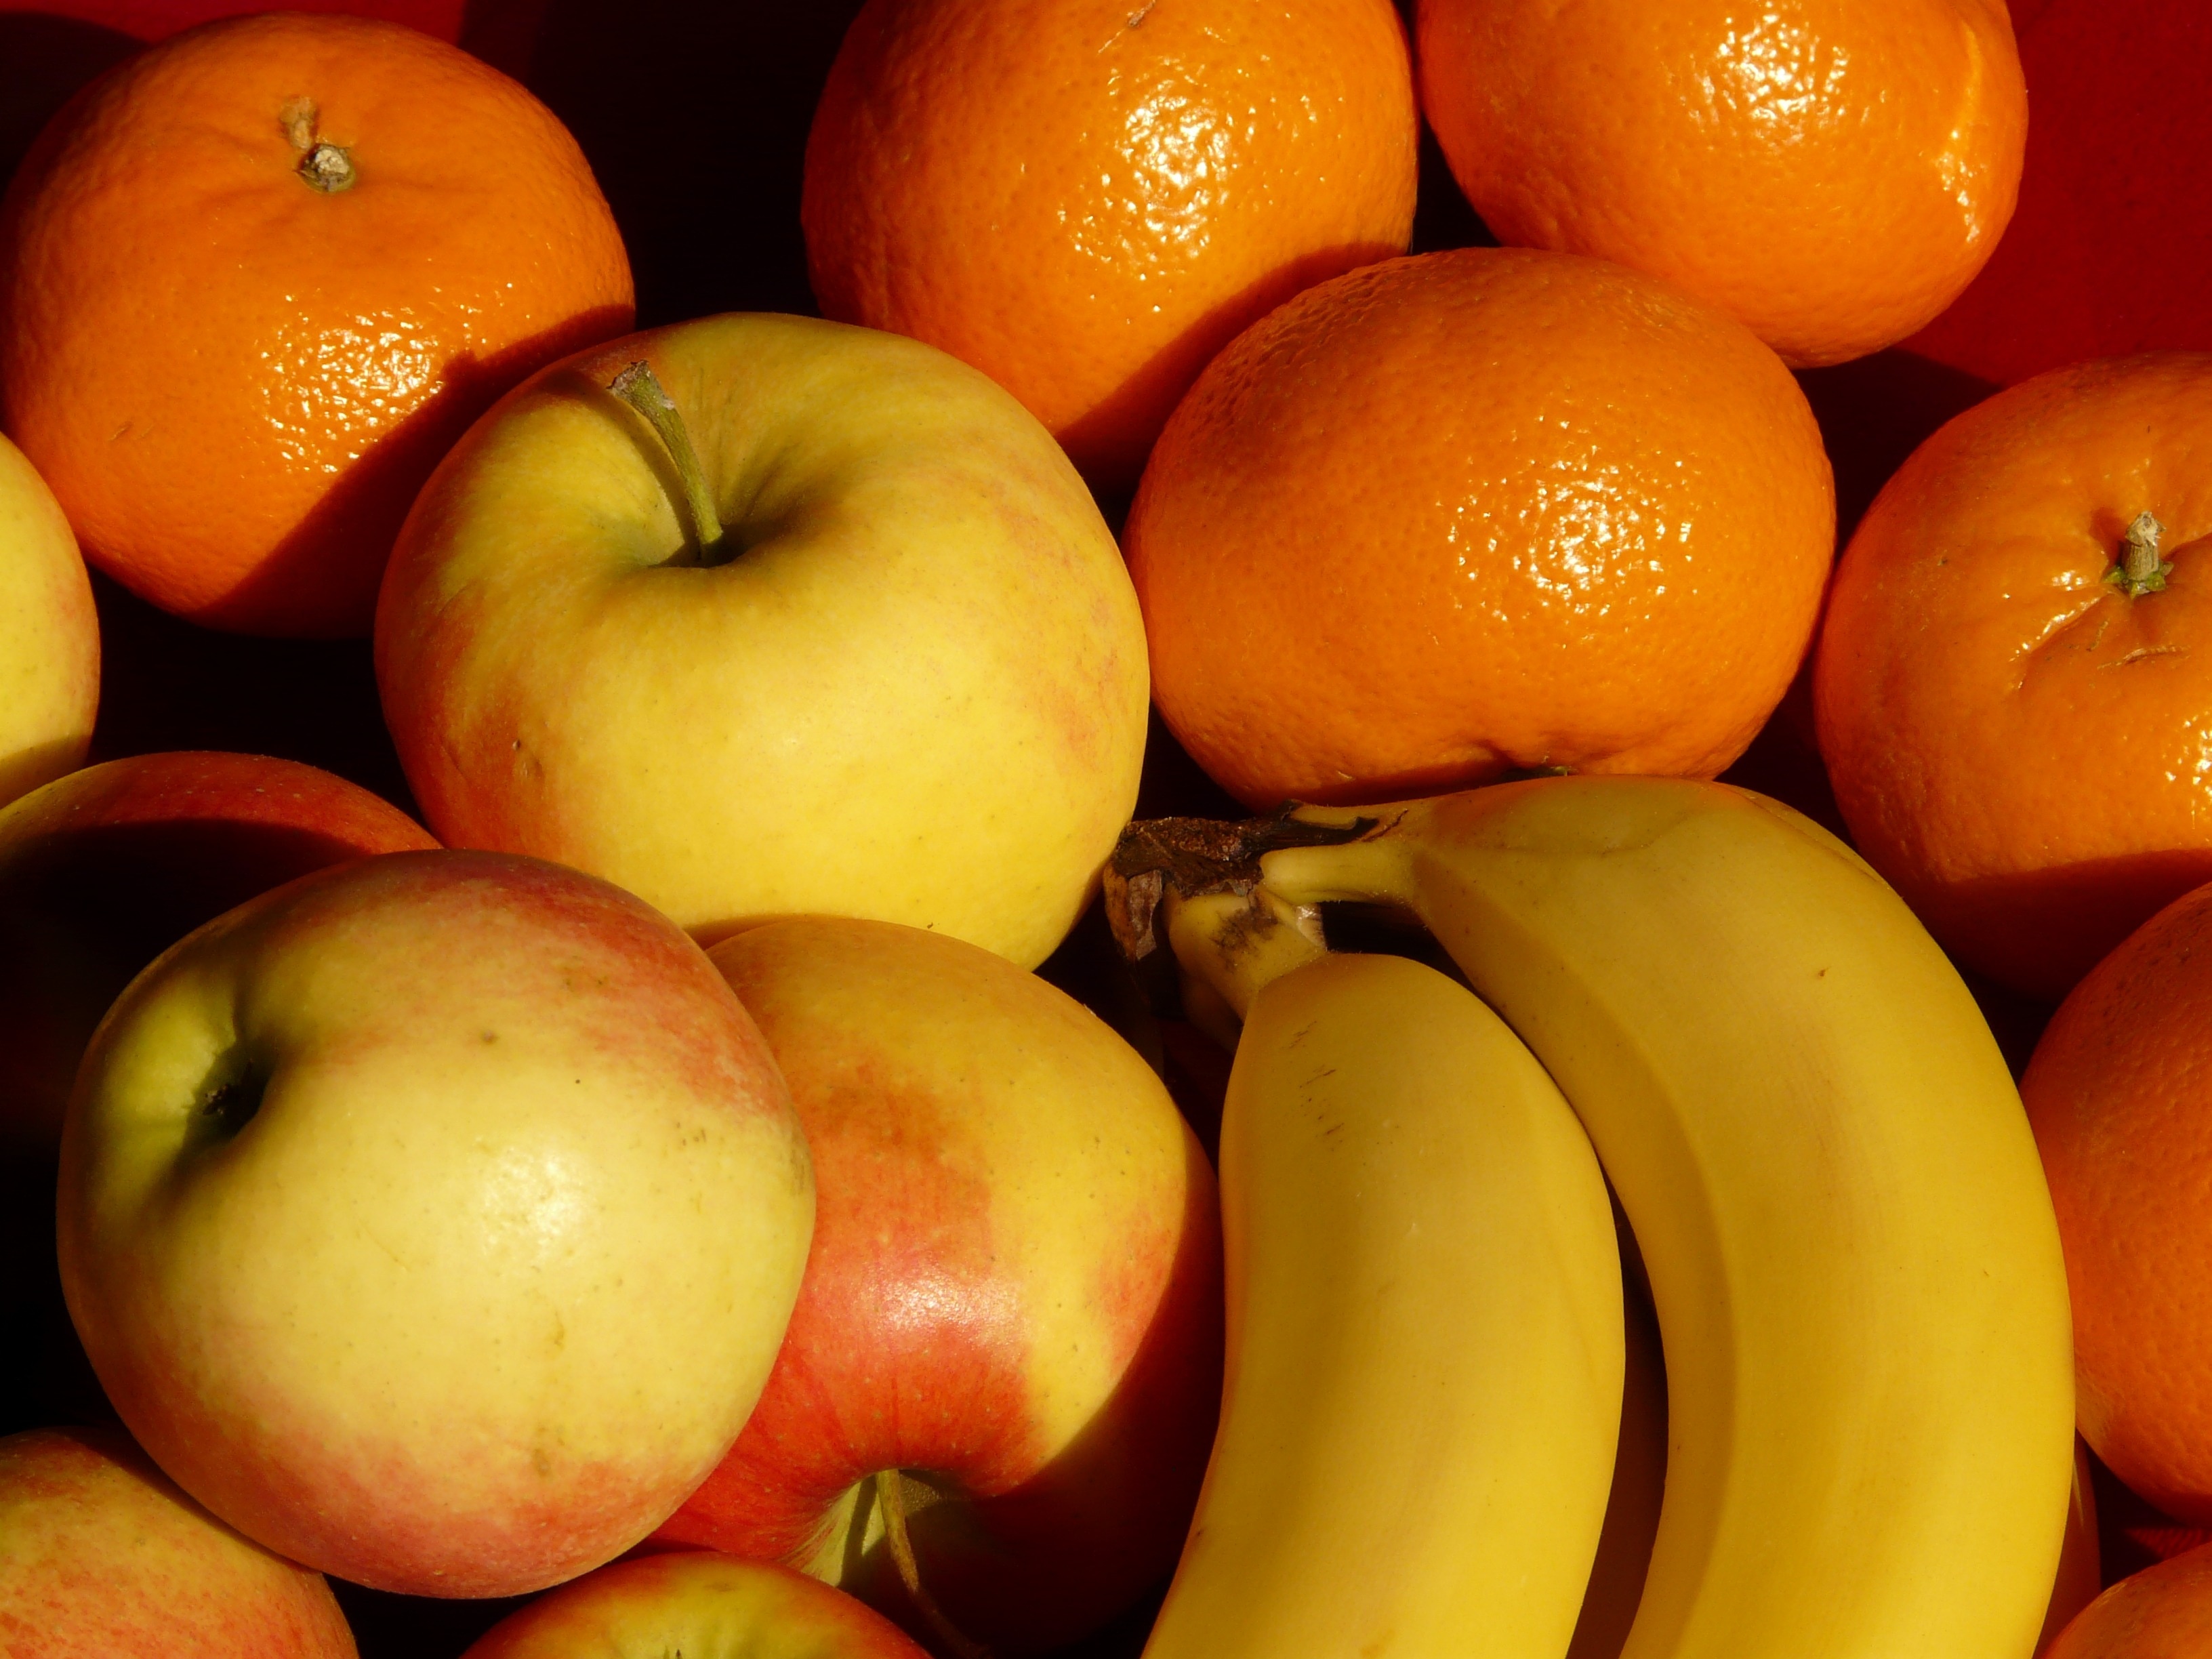 apple, orange and banana fruit